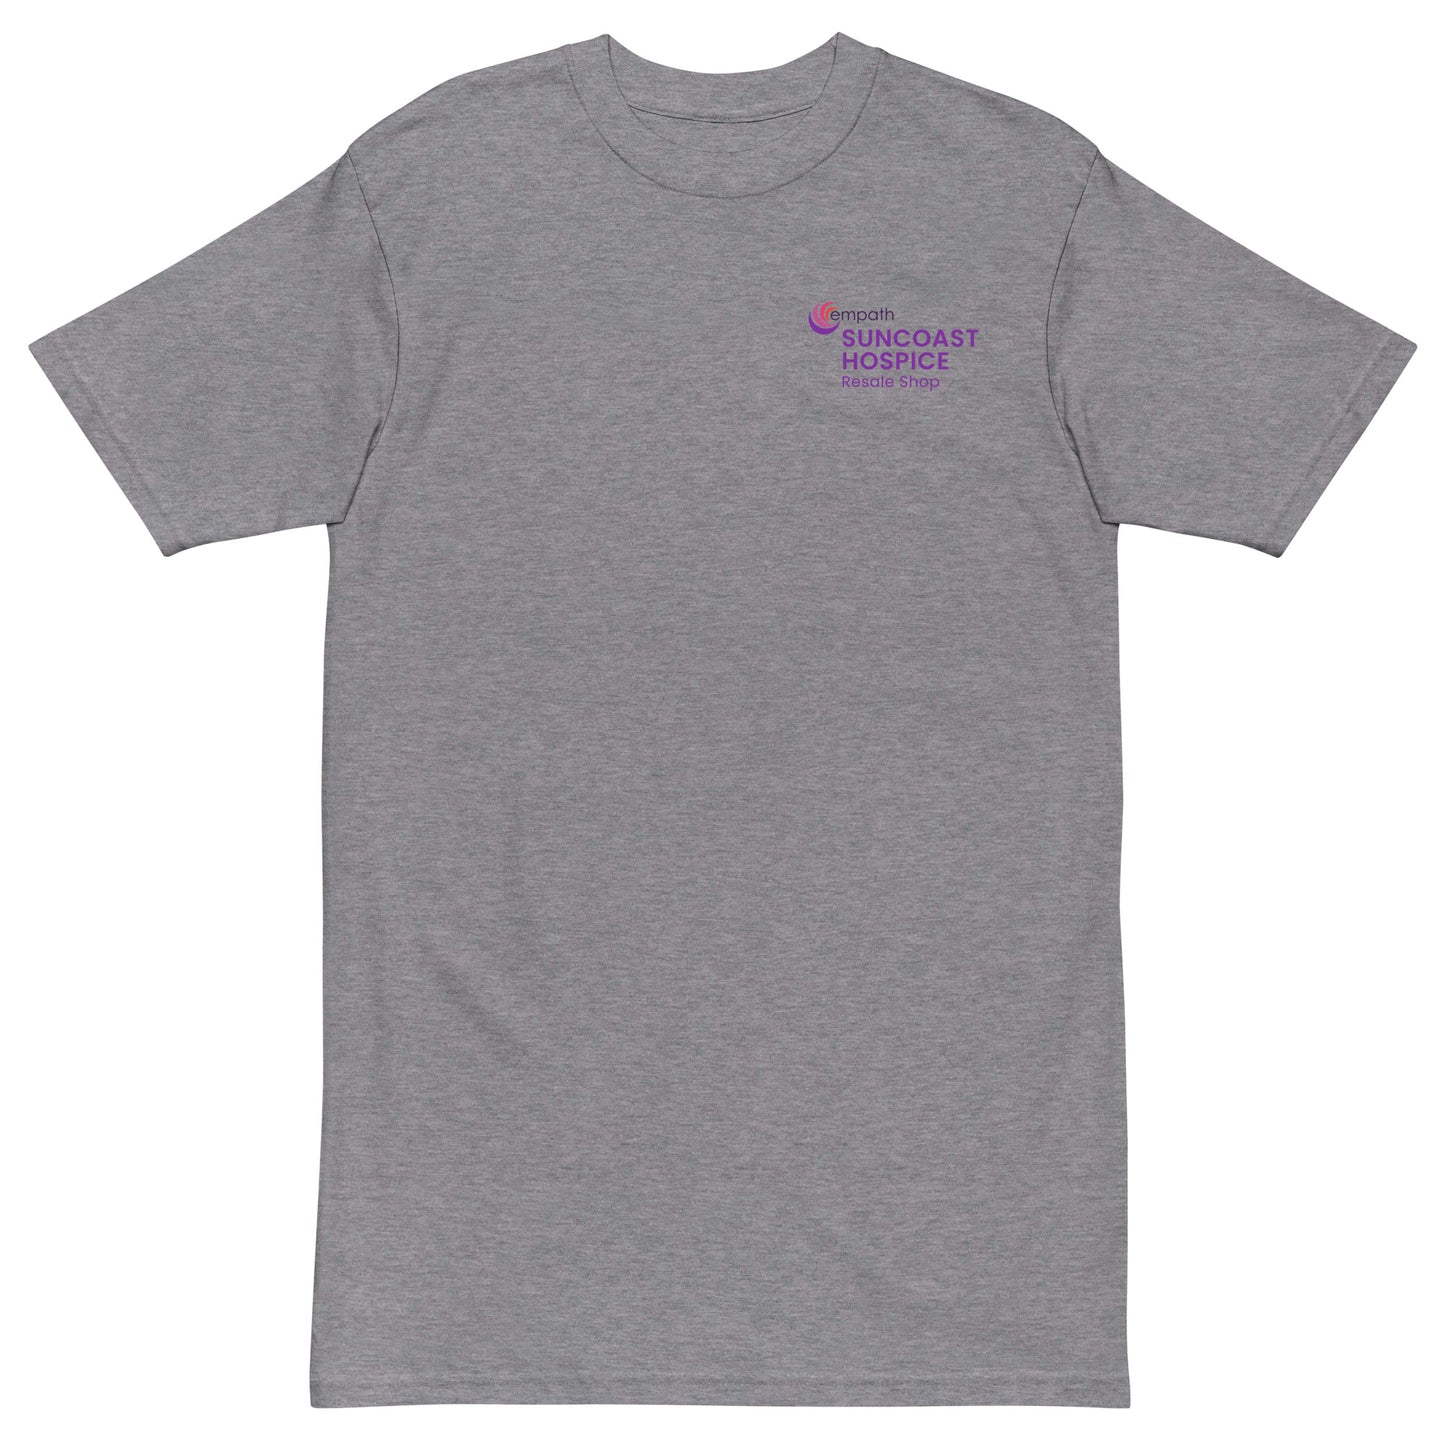 Premium Heavyweight T-shirt - Suncoast Hospice Resale Shop